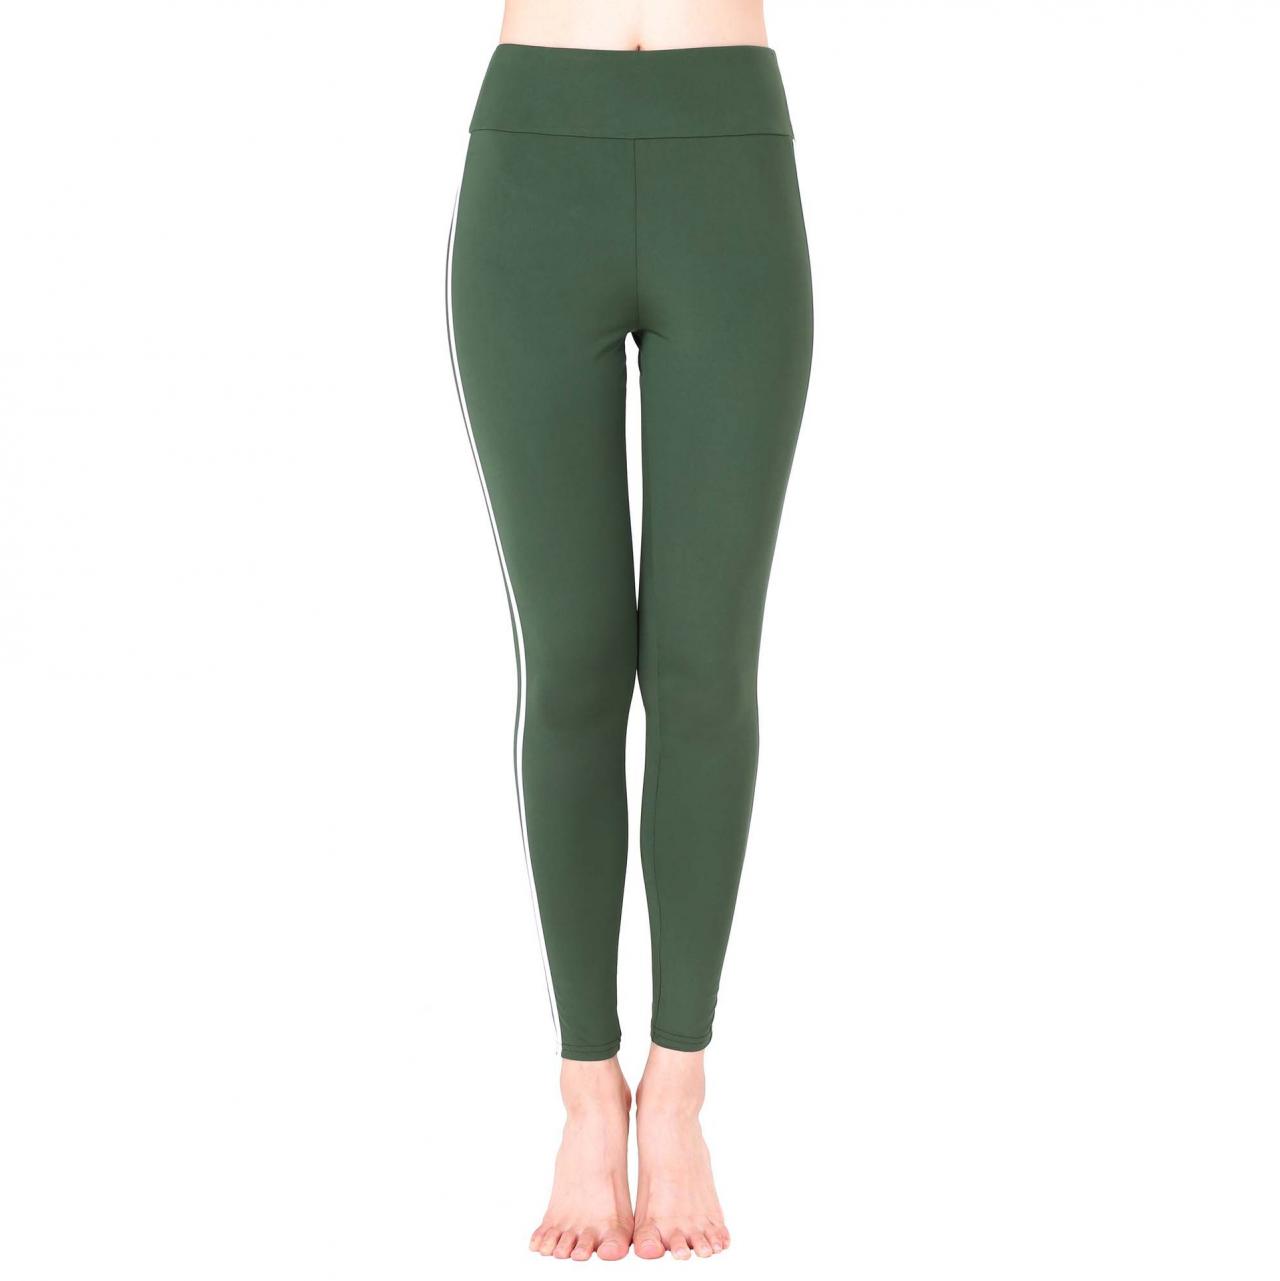  Women Yoga Striped Patchwork Leggings Slim High Waist Sports Fitness Gym Running Pants army green